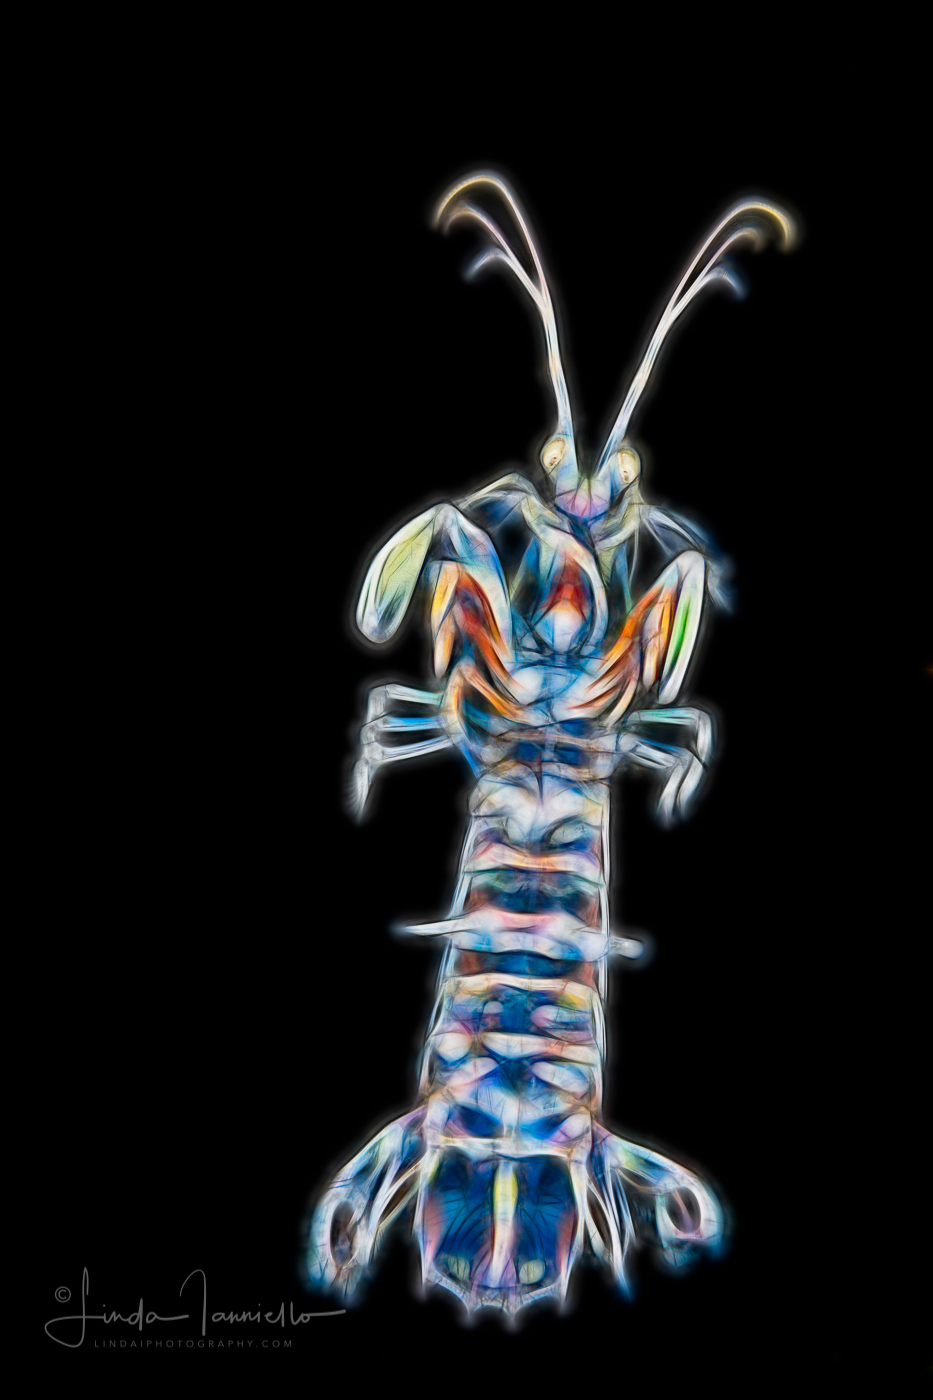 Mantis Shrimp - Stomatopoda